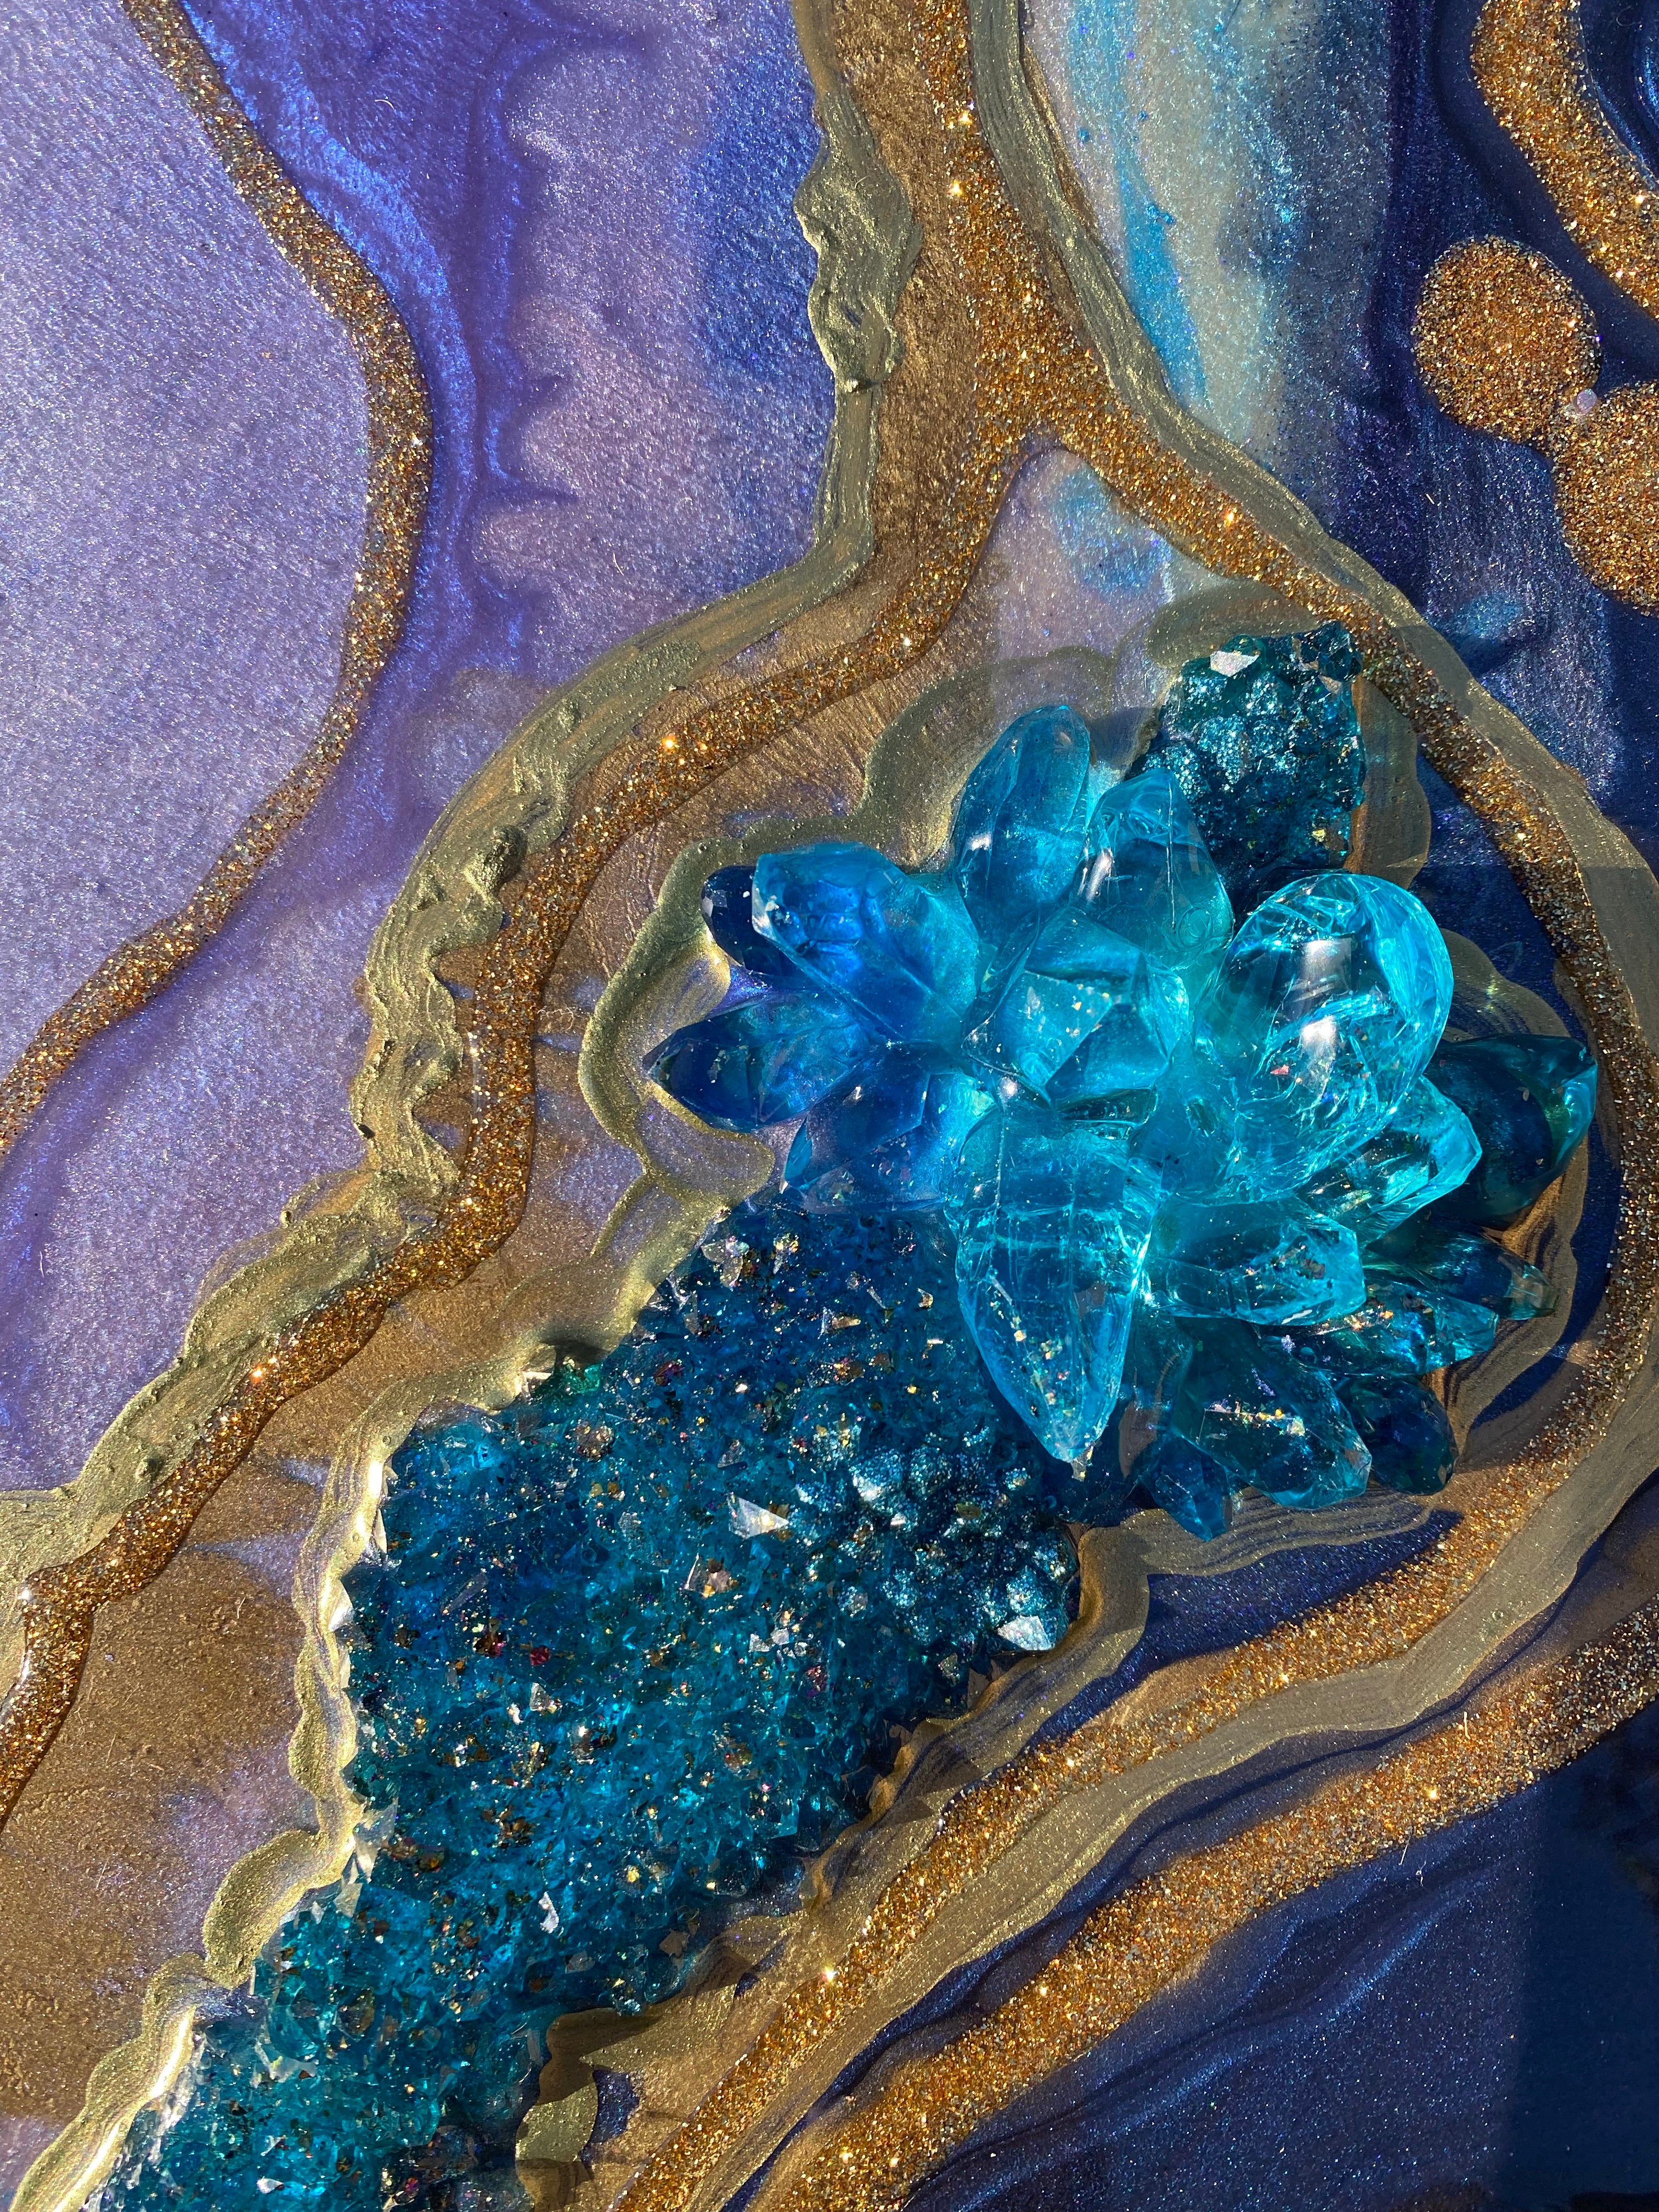 Amethyst Geode. Freeform Purple and Gold Geode Gemstone Artwork with Amethysts